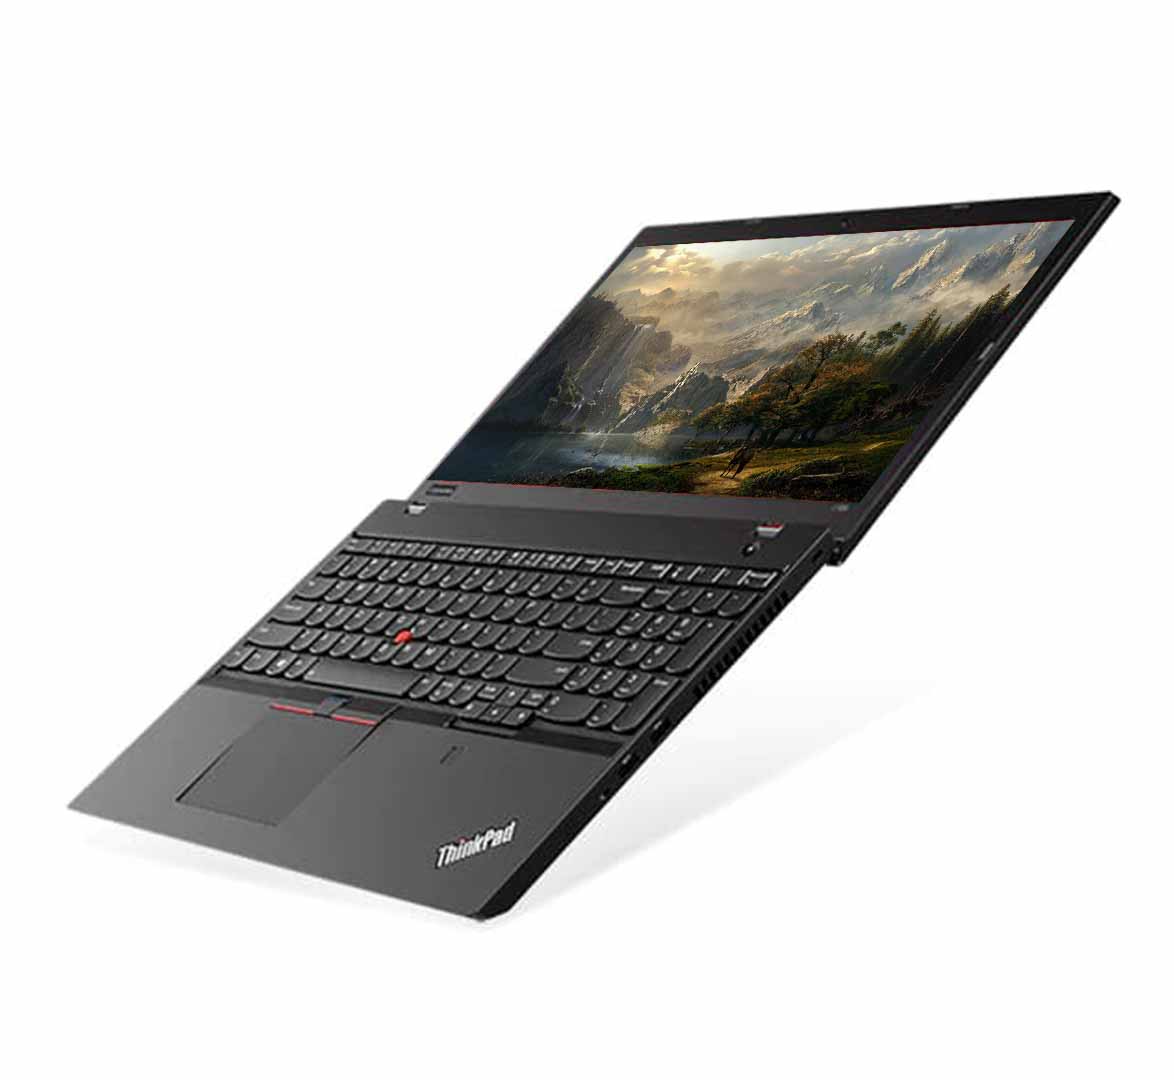 Lenovo ThinkPad L580 Business Laptop, Intel Core i5-8th Generation 